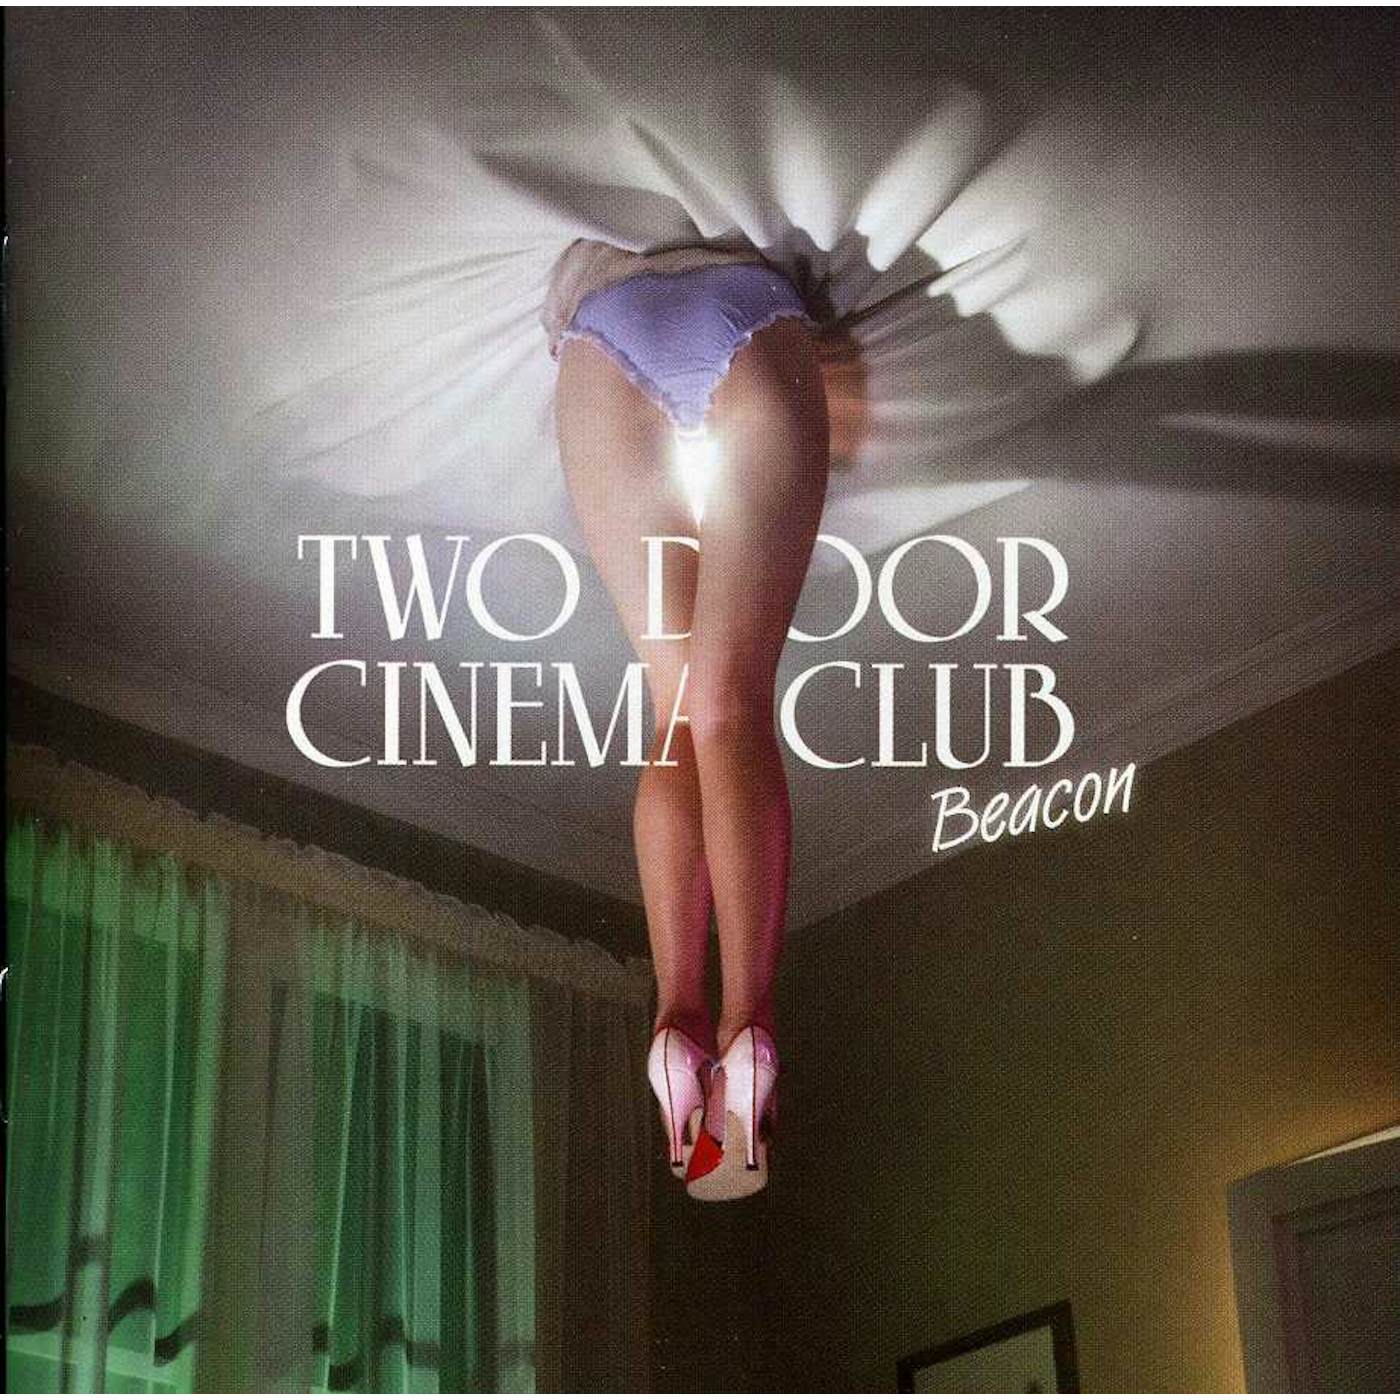 Two Door Cinema Club BEACON CD